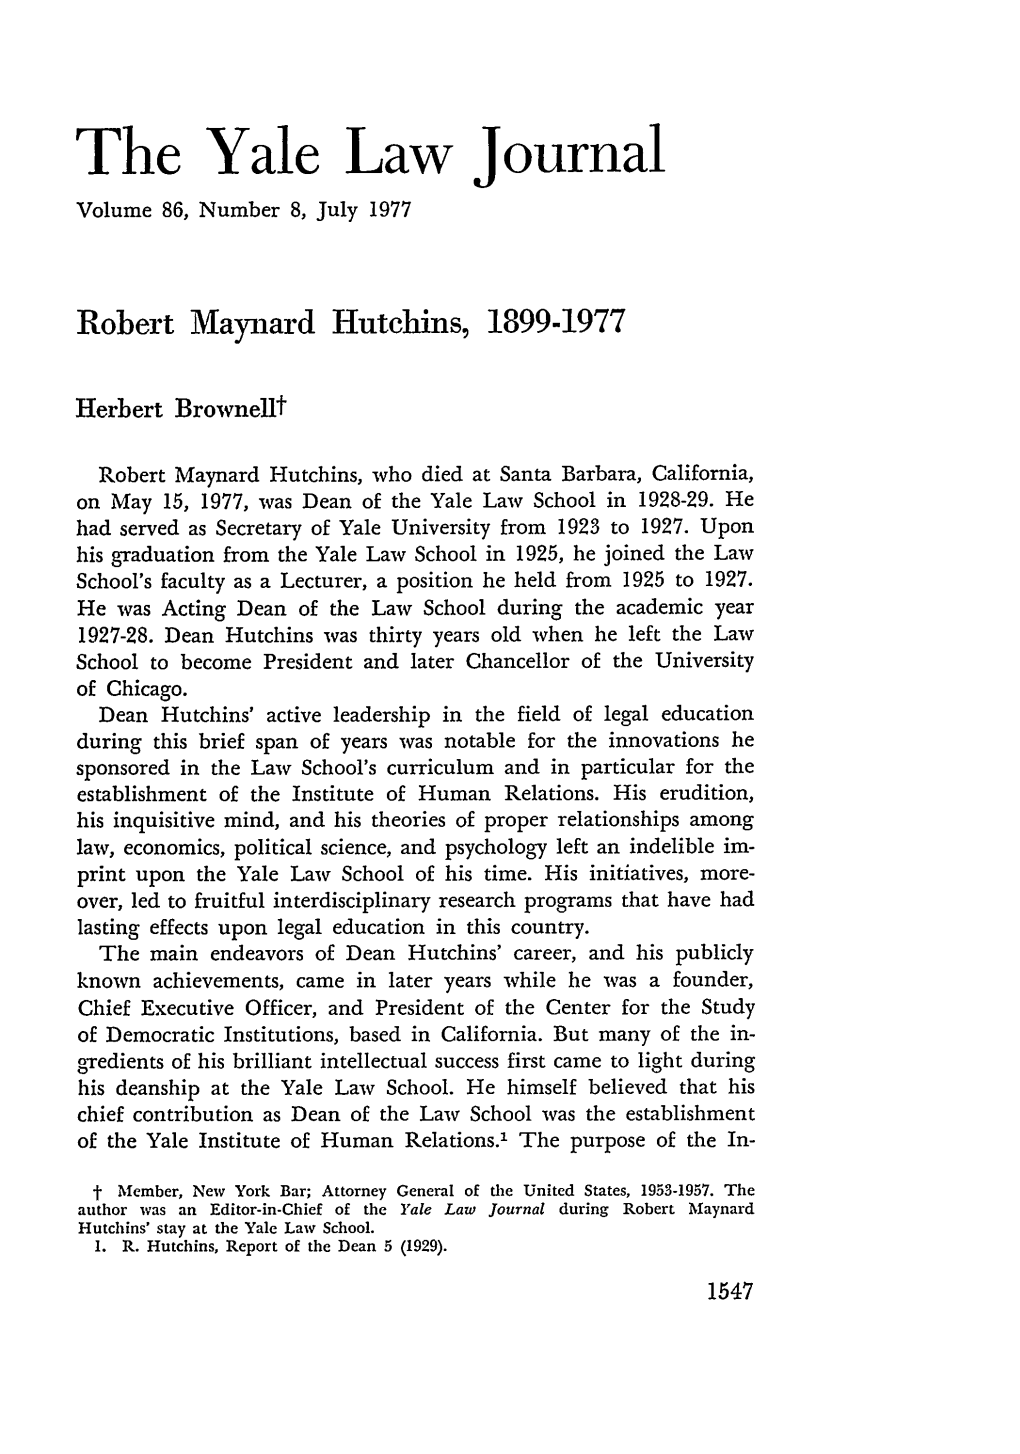 Robert Maynard Hutchins, 1899-1977